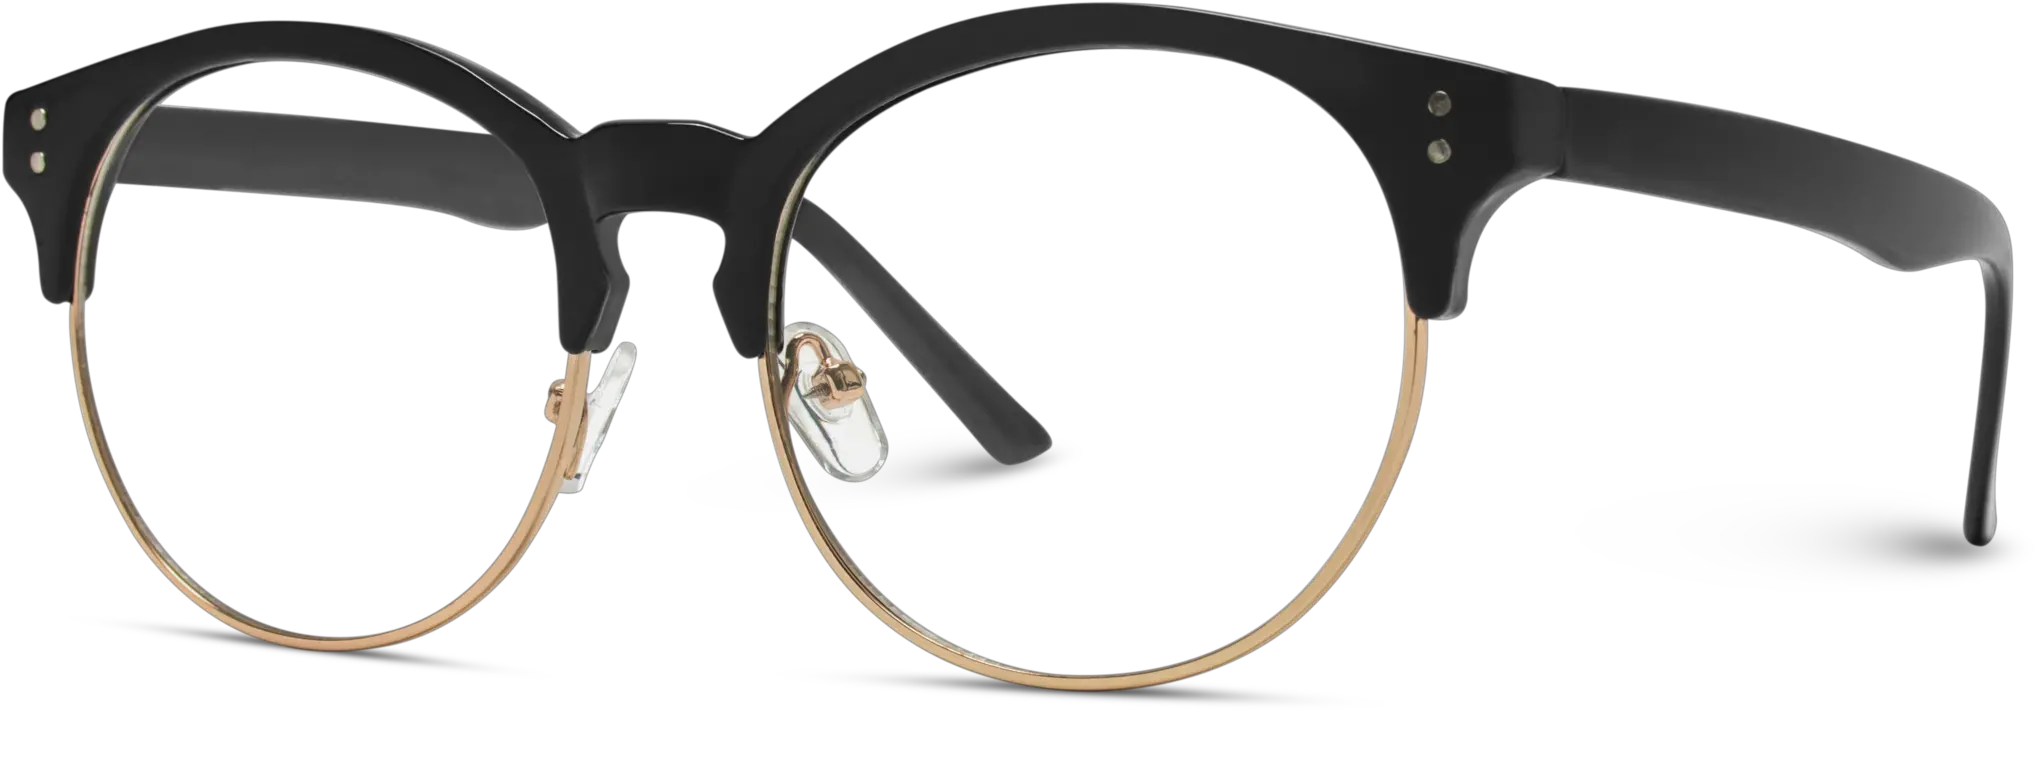 Download Semi Transparent Glasses Transparent Background Glasses Transparent Png Hipster Glasses Png